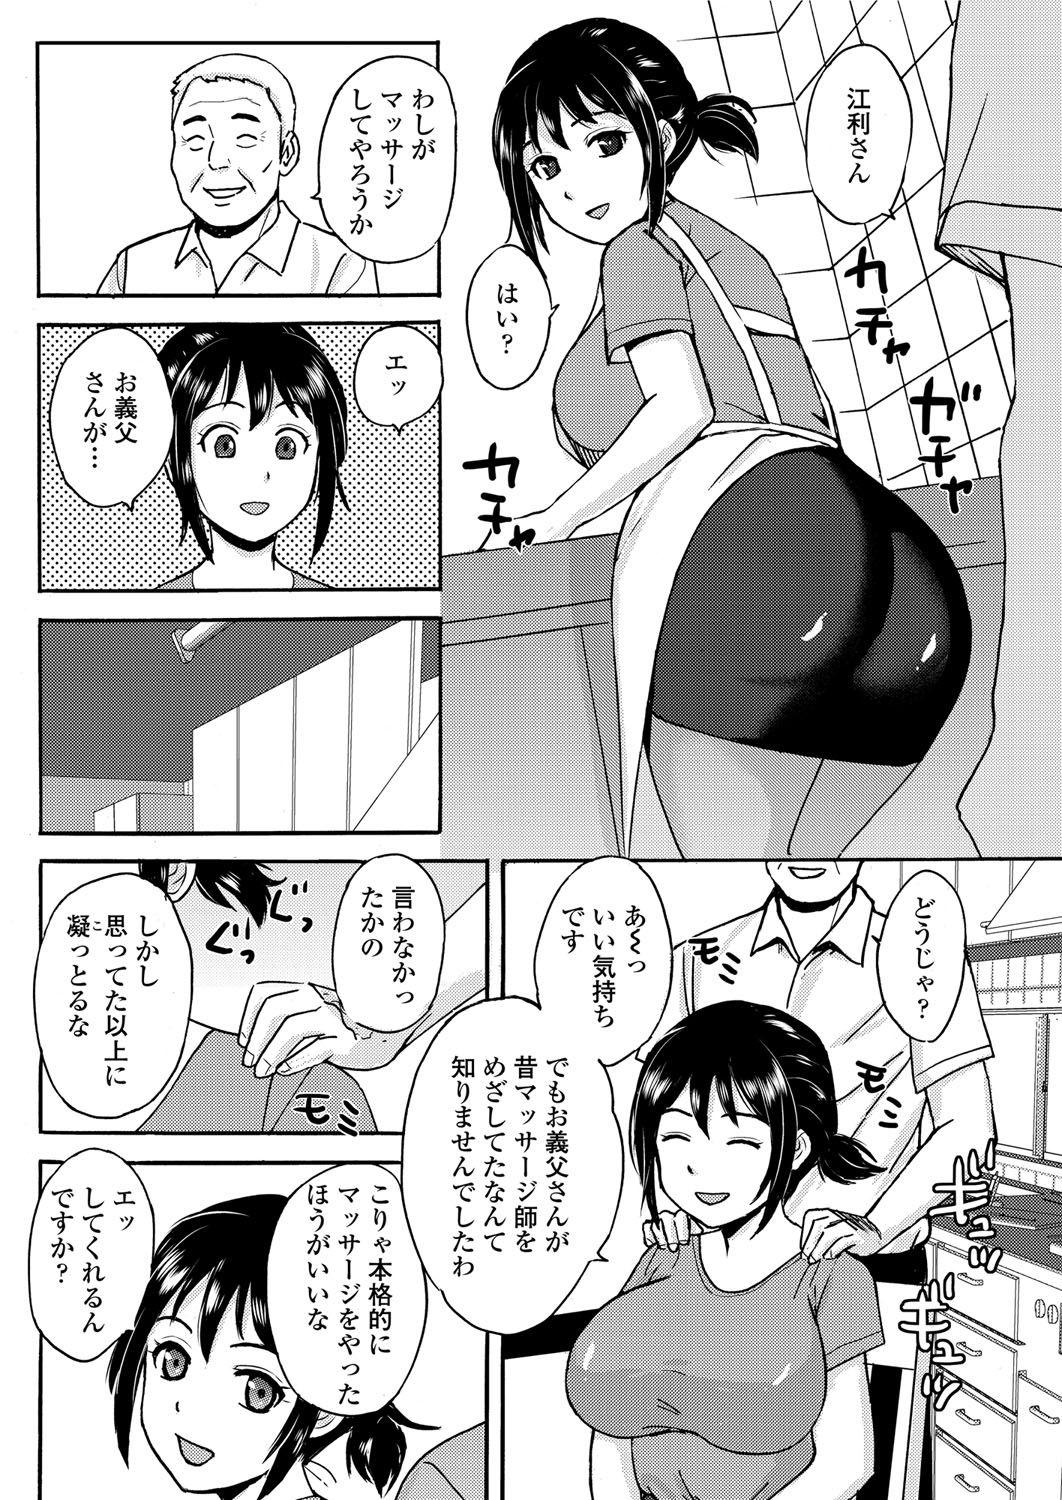 Pendeja Gifu no Massage Female Domination - Page 2